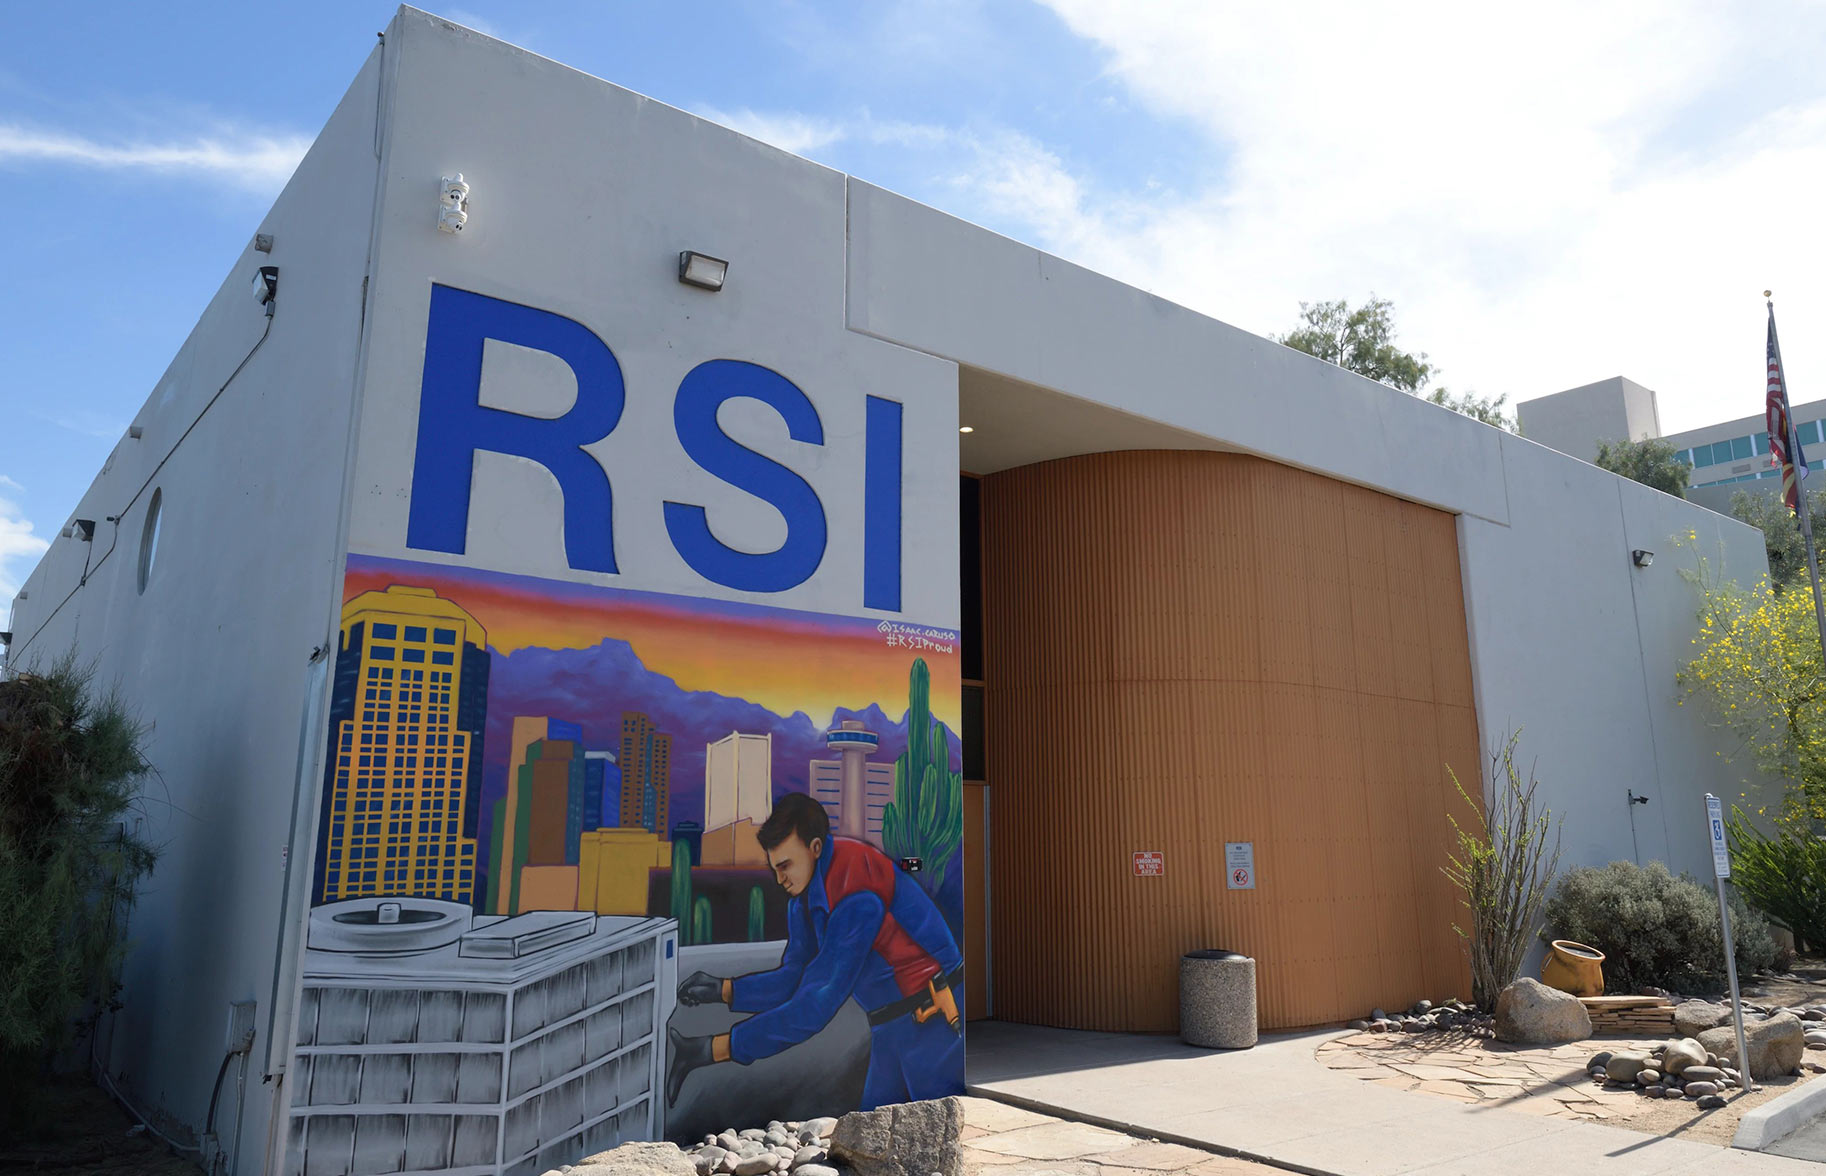 Front of The Refrigeration School campus building in Phoenix, AZ